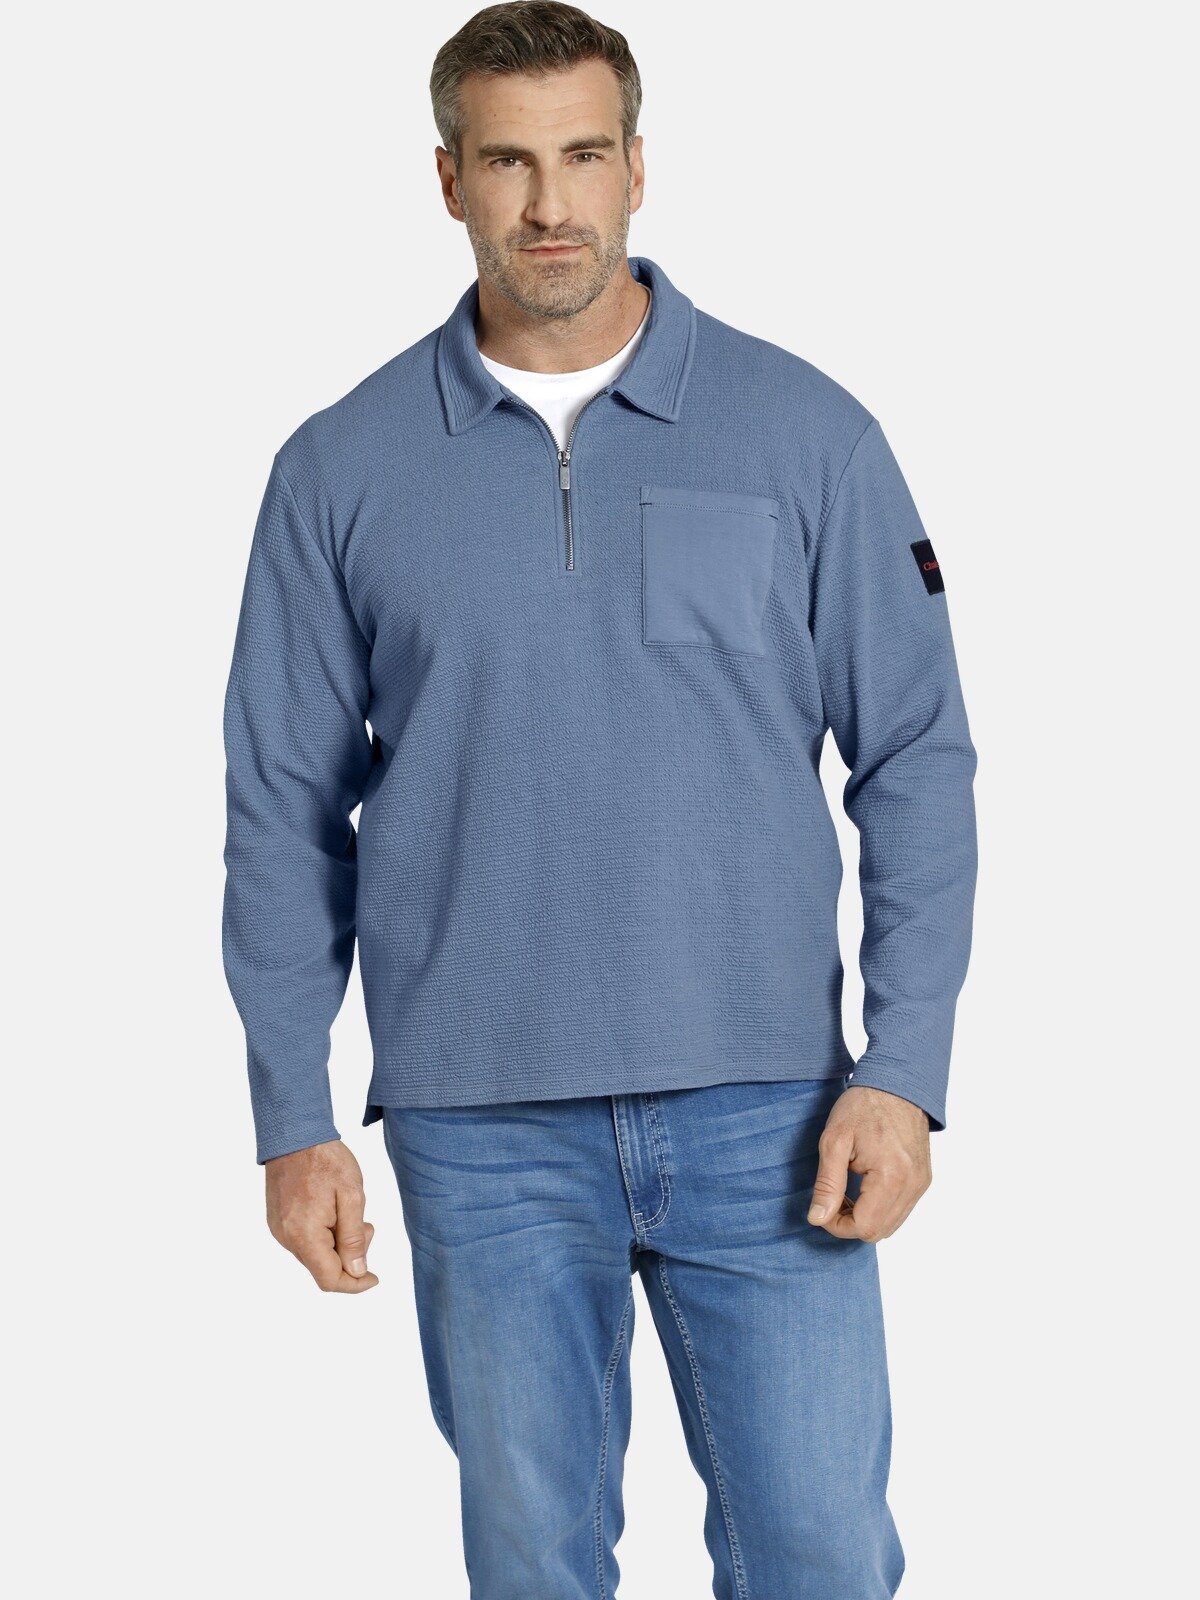 Super beliebt, hohe Qualität garantiert Charles Colby Sweatshirt EARL Kragen mit VASS Zipper weich am